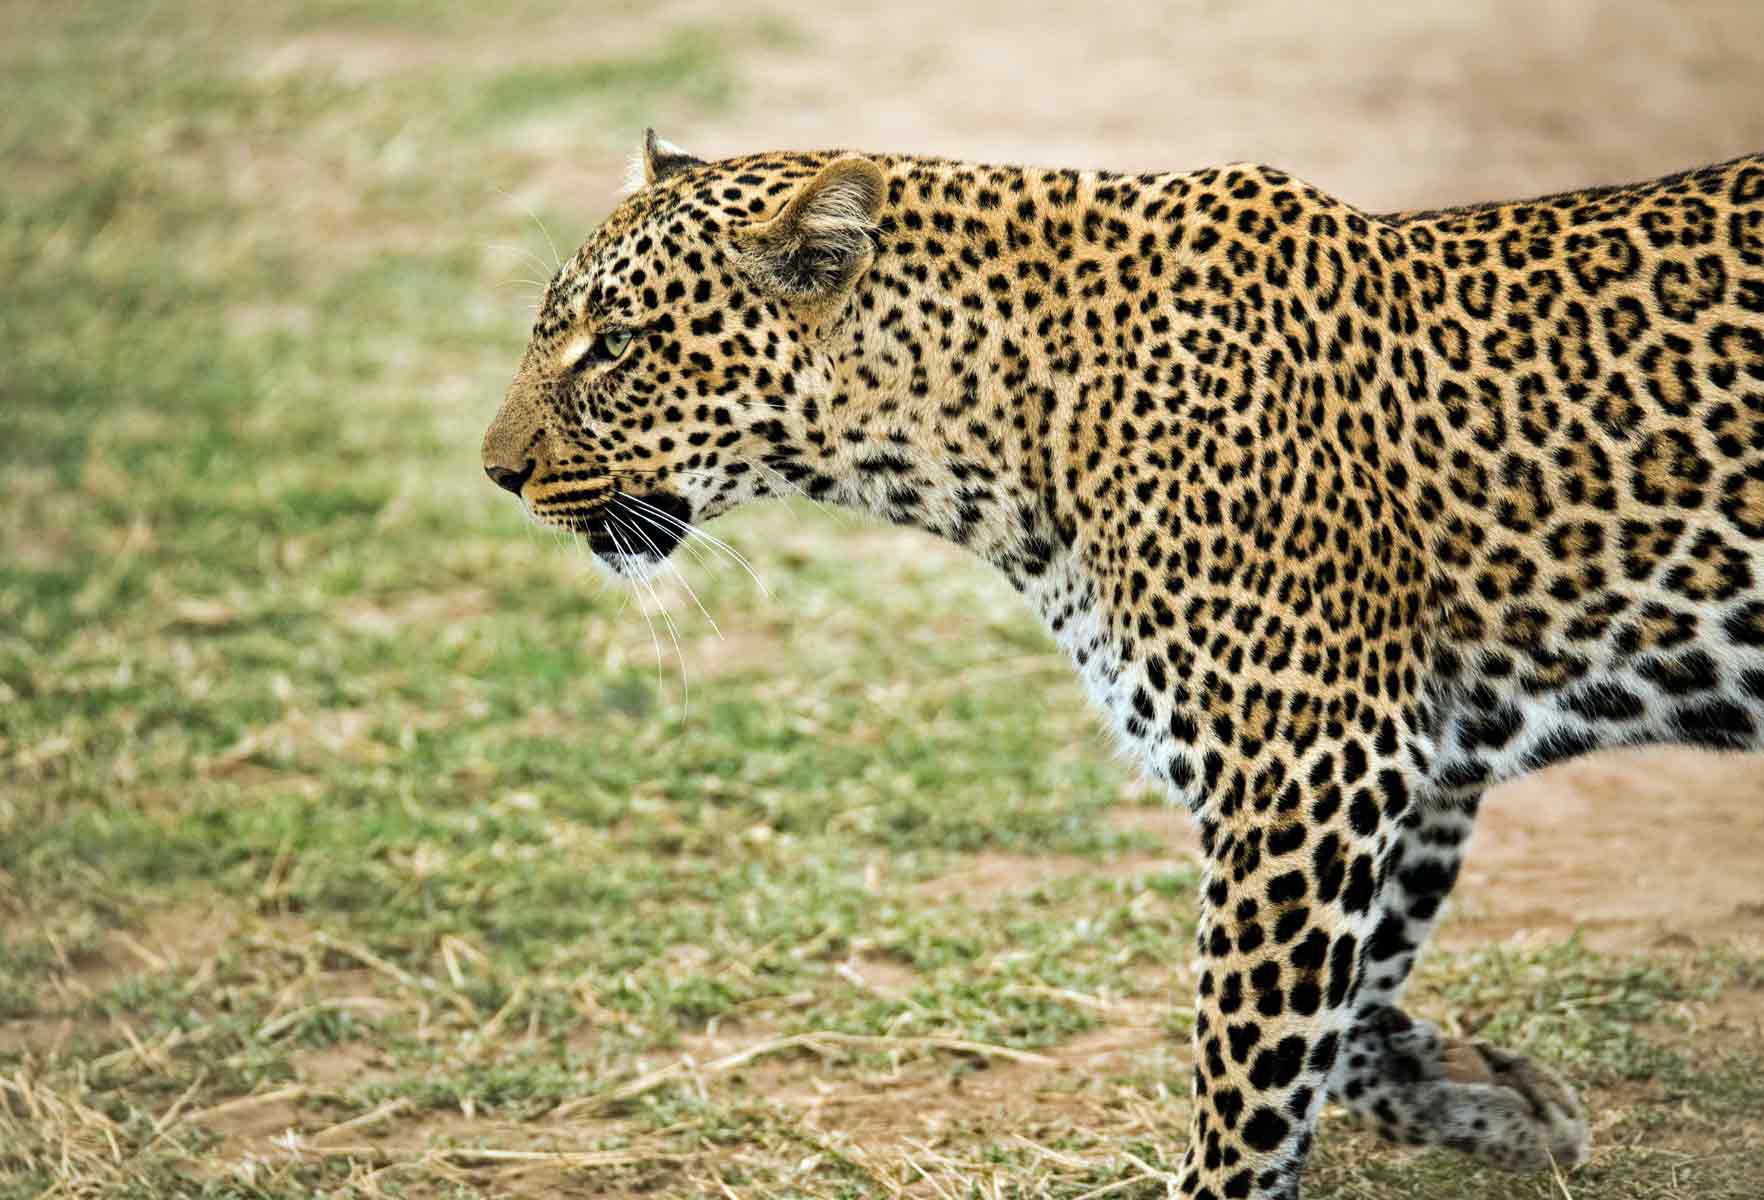 Leopard The Big 5 Animal safari